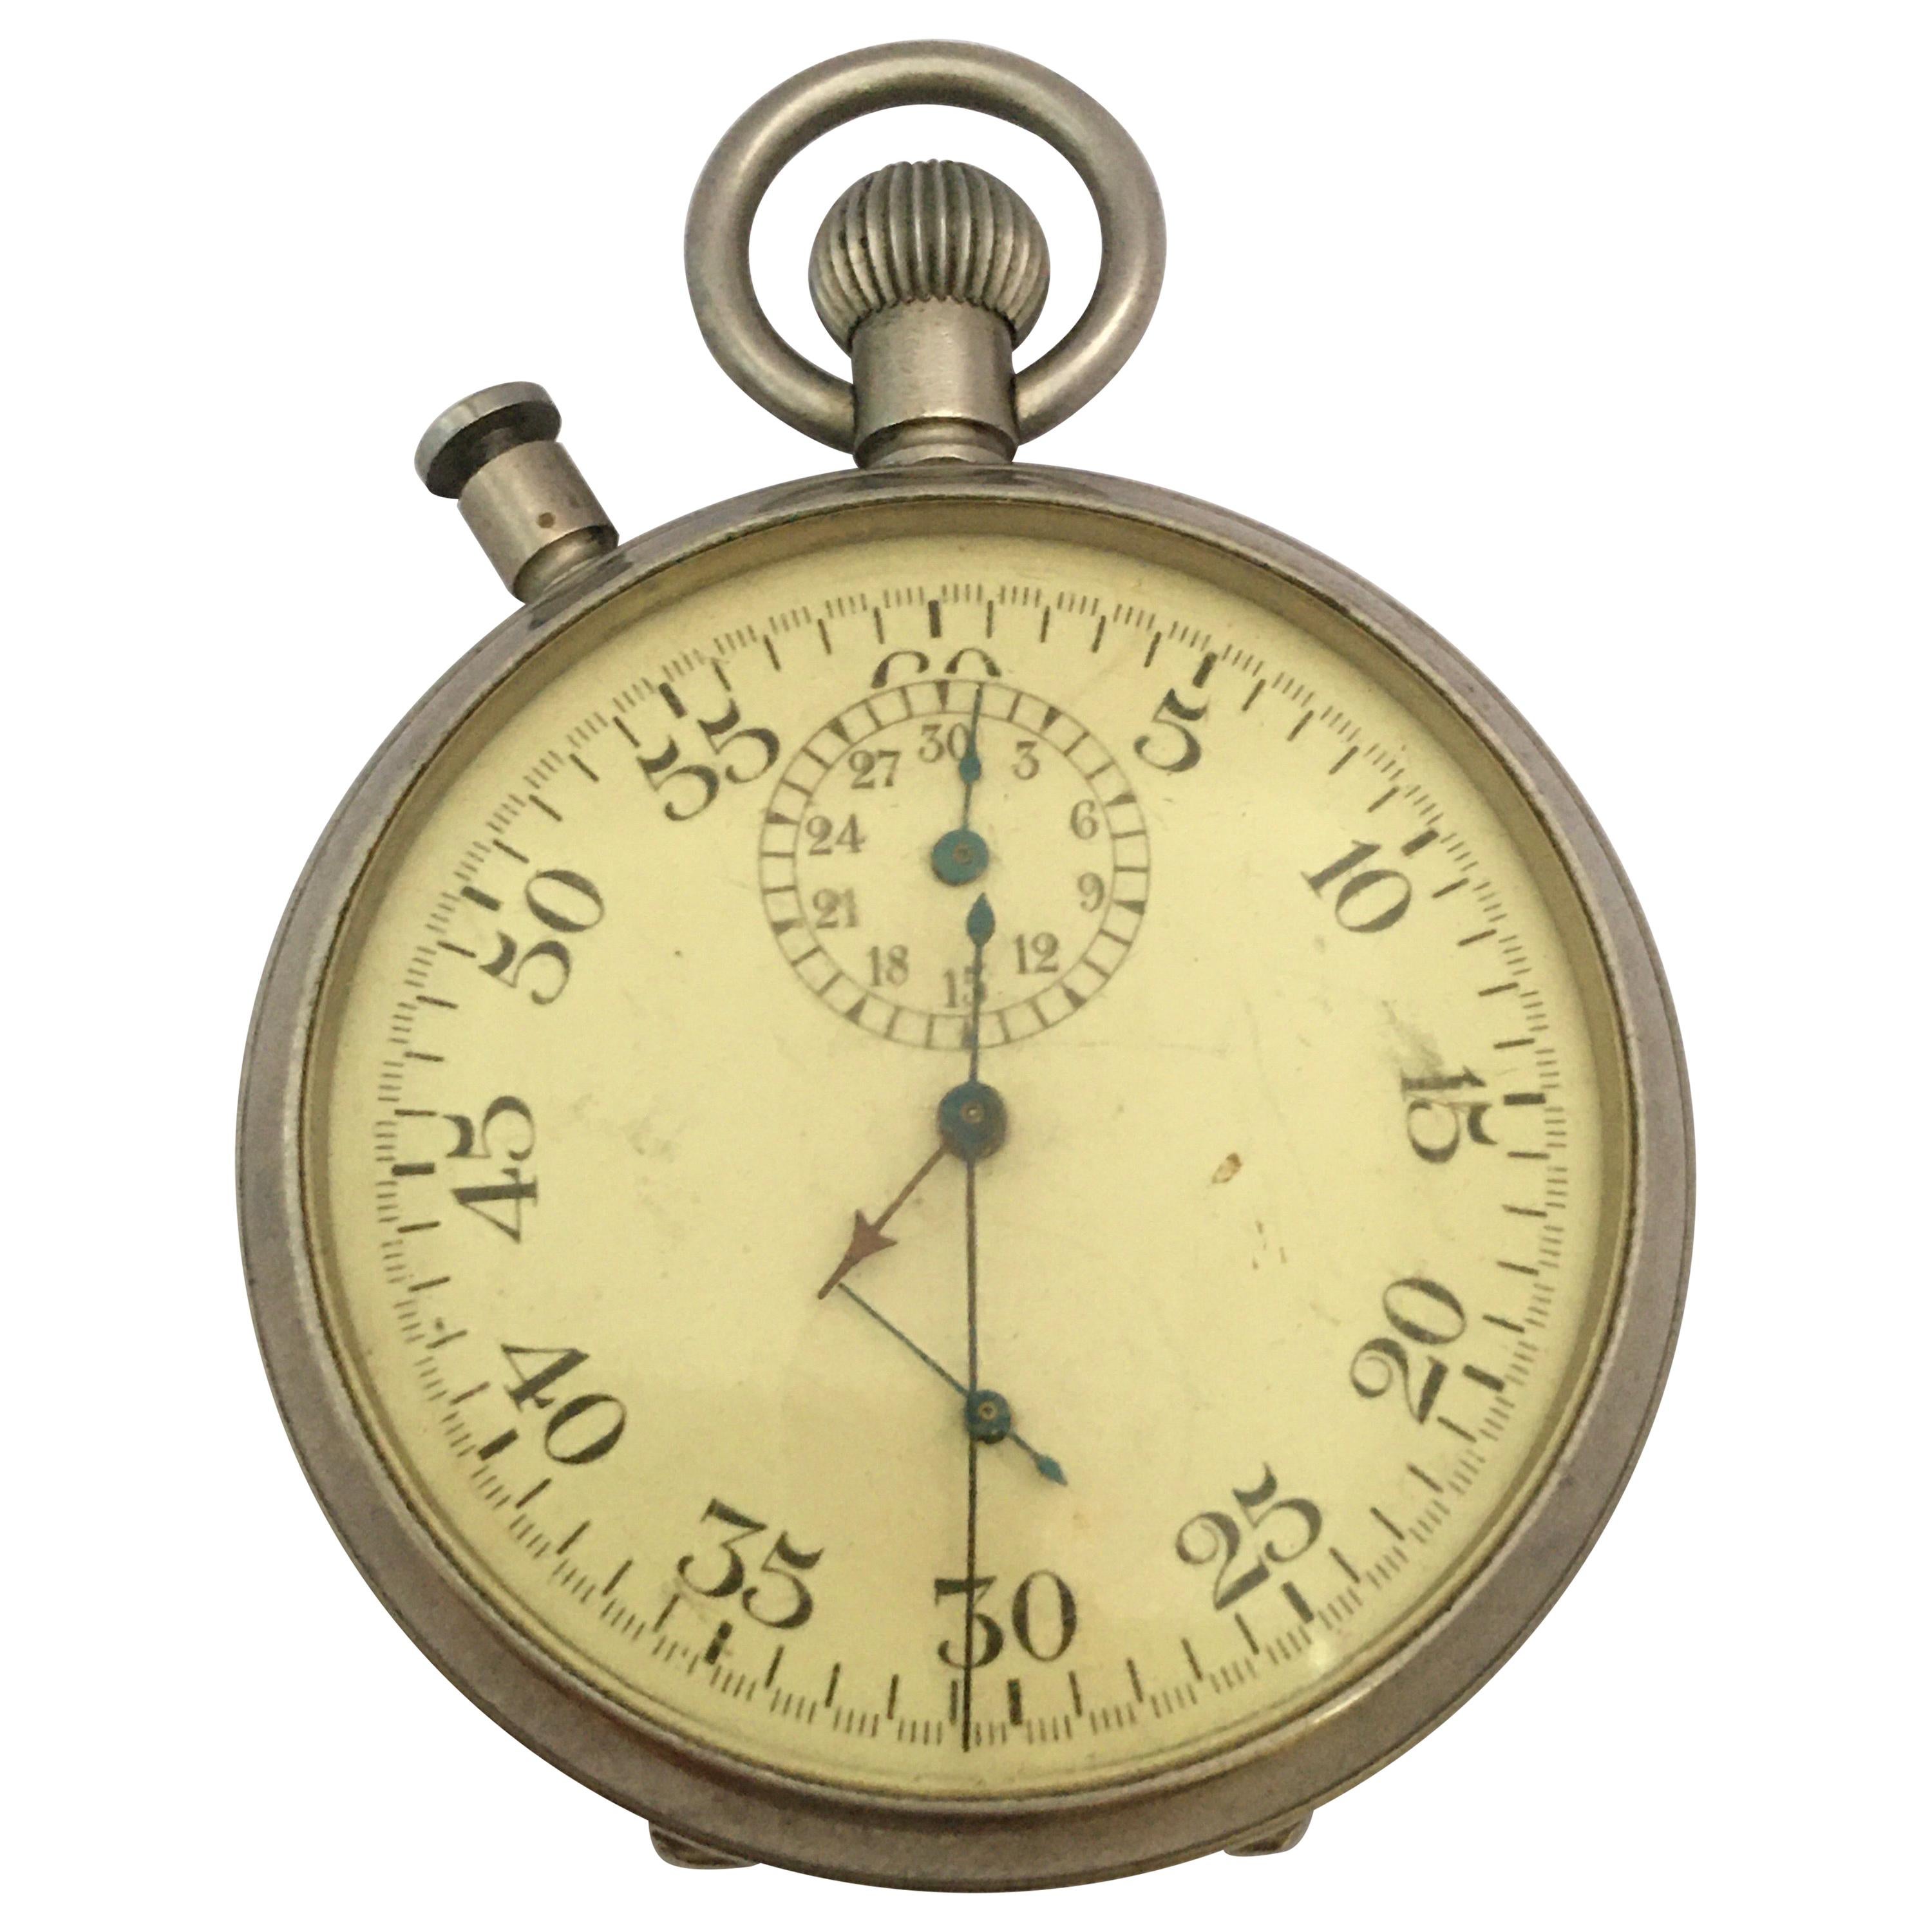 Rare 1940s Military Chronograph Stopwatch with Split-Seconds PATT. 4 No. 11643